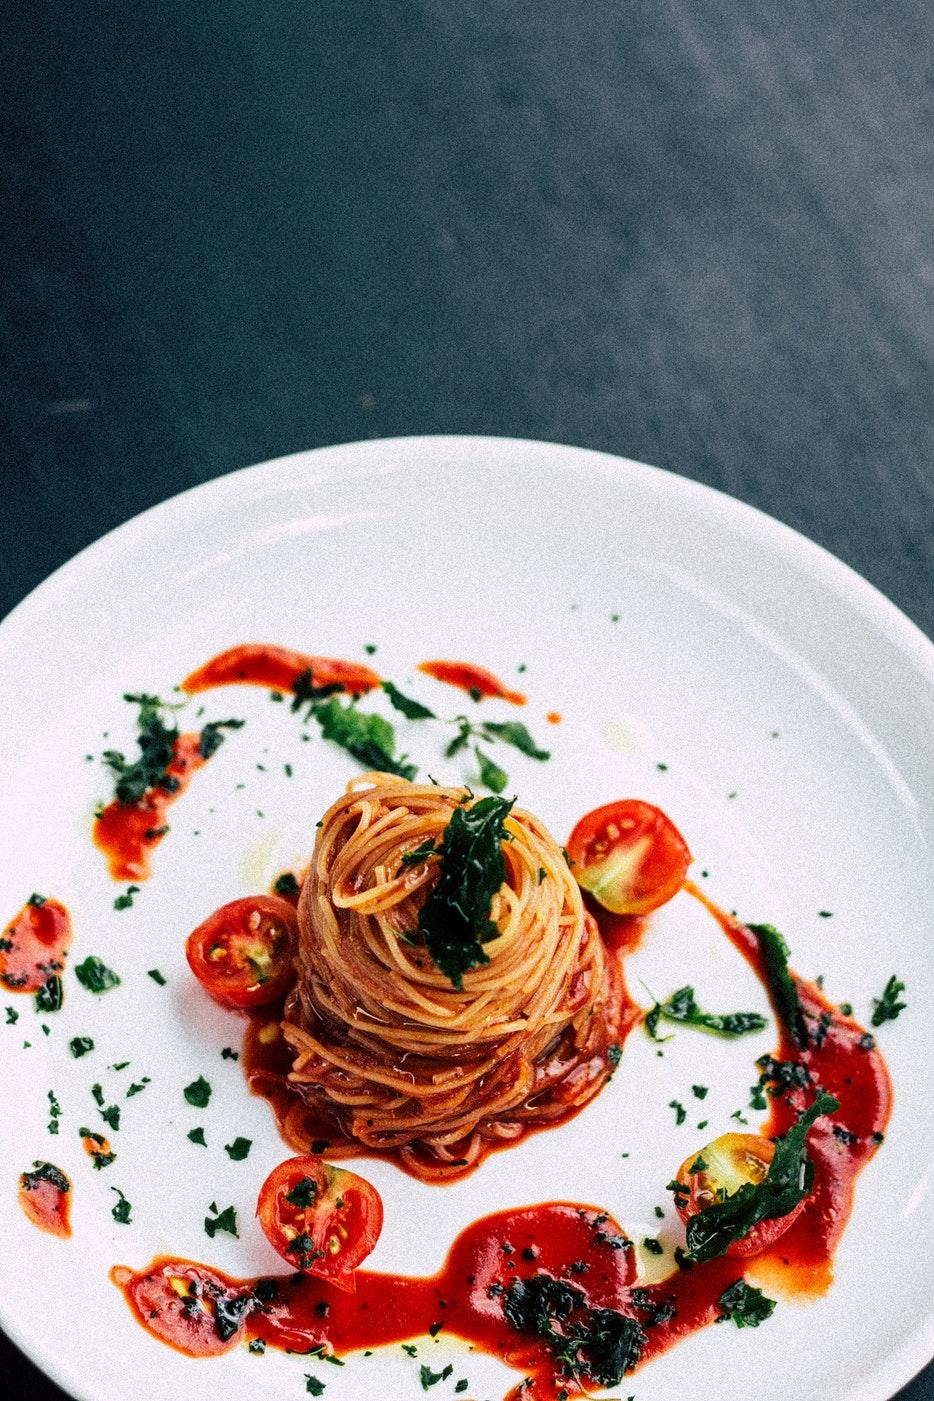 Pasta Favorites & Kids Menu Ÿ Spaghetti $9.99 Kids $6.99 with Meatballs, Bolognese Sauce, Italian Sausage, or Mushrooms Spaghetti $8.99 Kids $5.99 with Marinara Sauce Ÿ Fettuccine Alfredo $11.